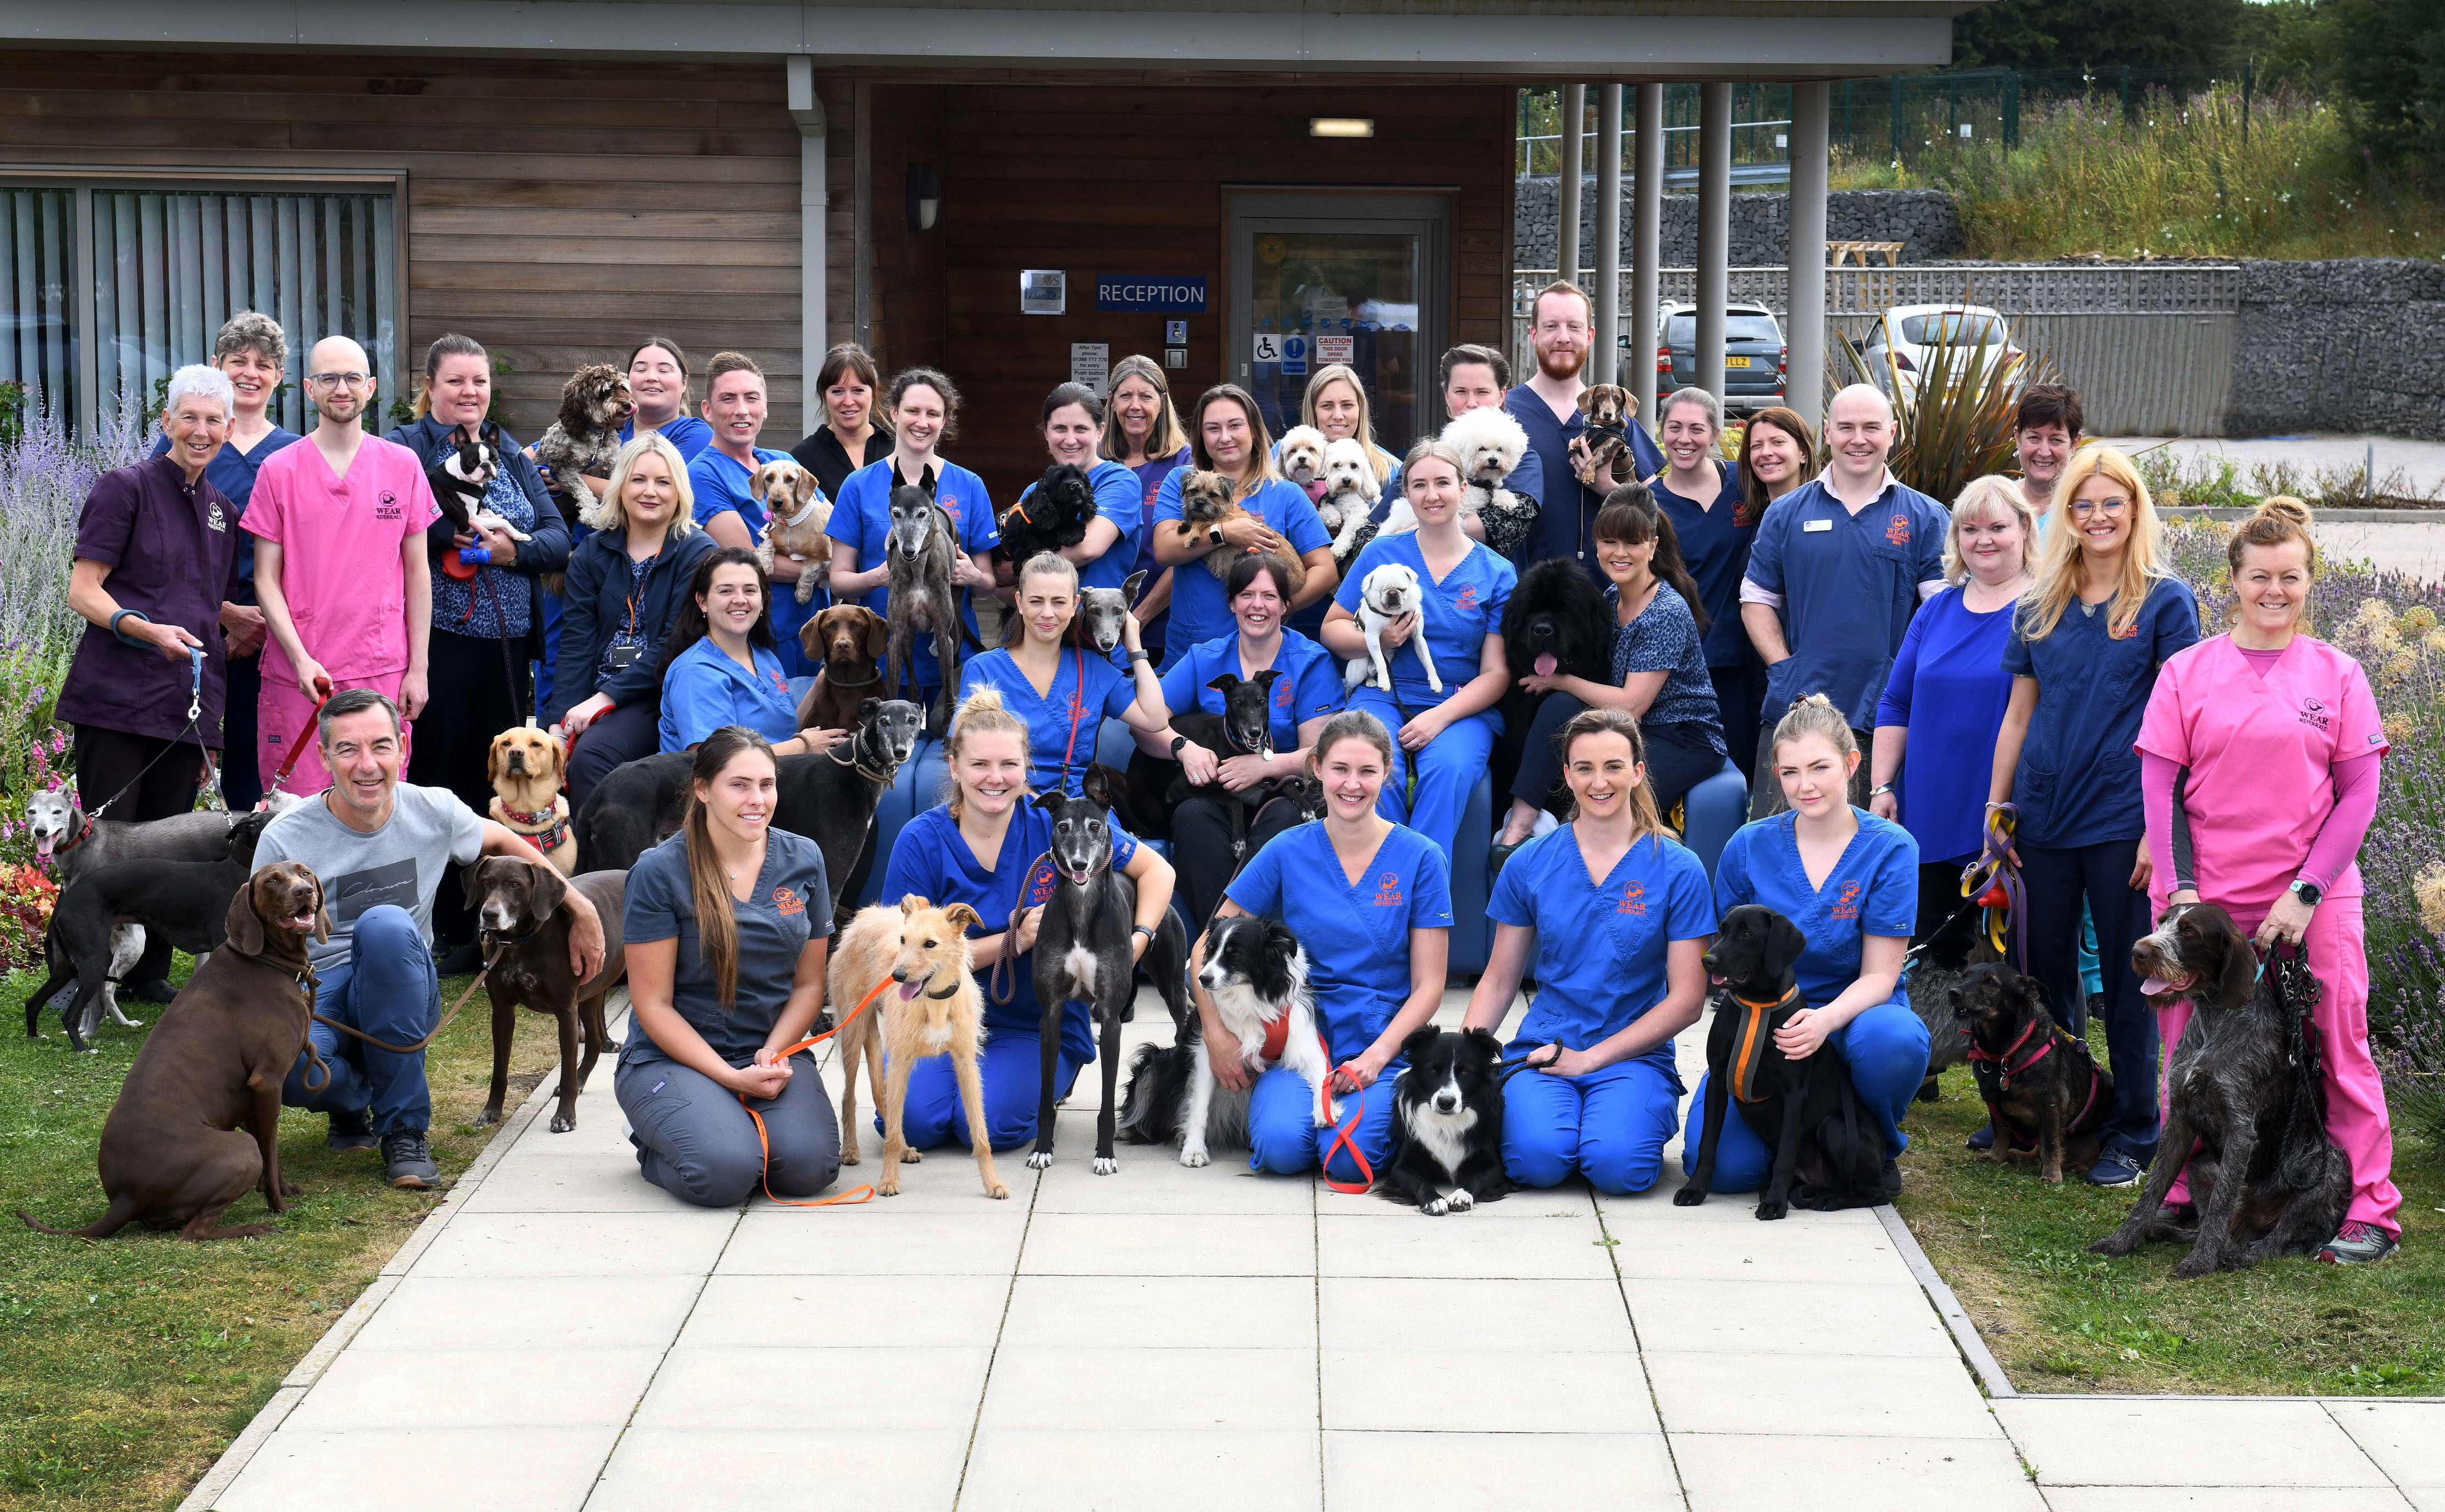 Wear Referrals team to star in 24/7 Pet Hospital